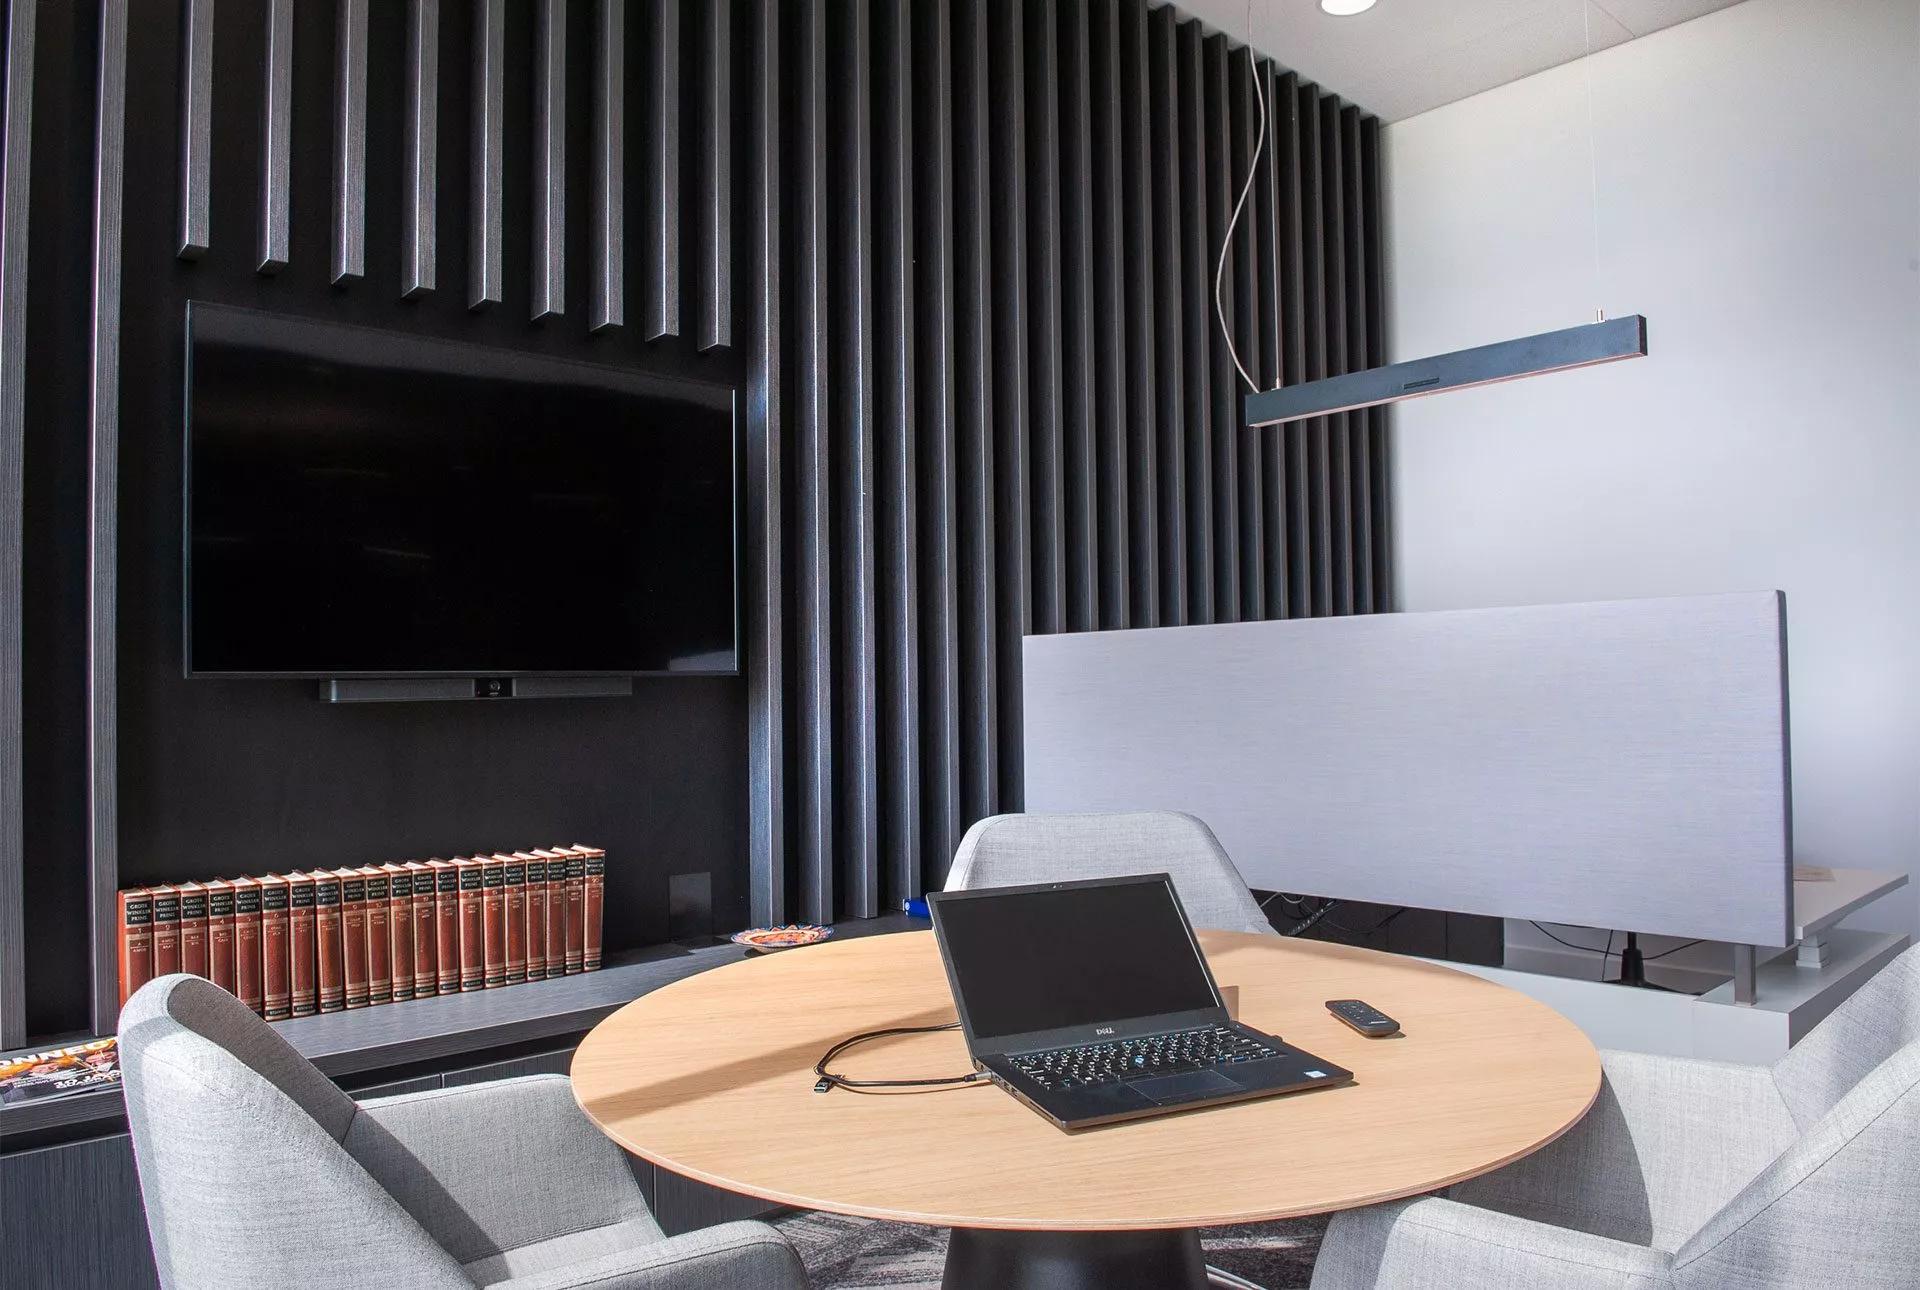 LC 包装公司办公室配备 Bose Videobar VB1 的小型会议室。